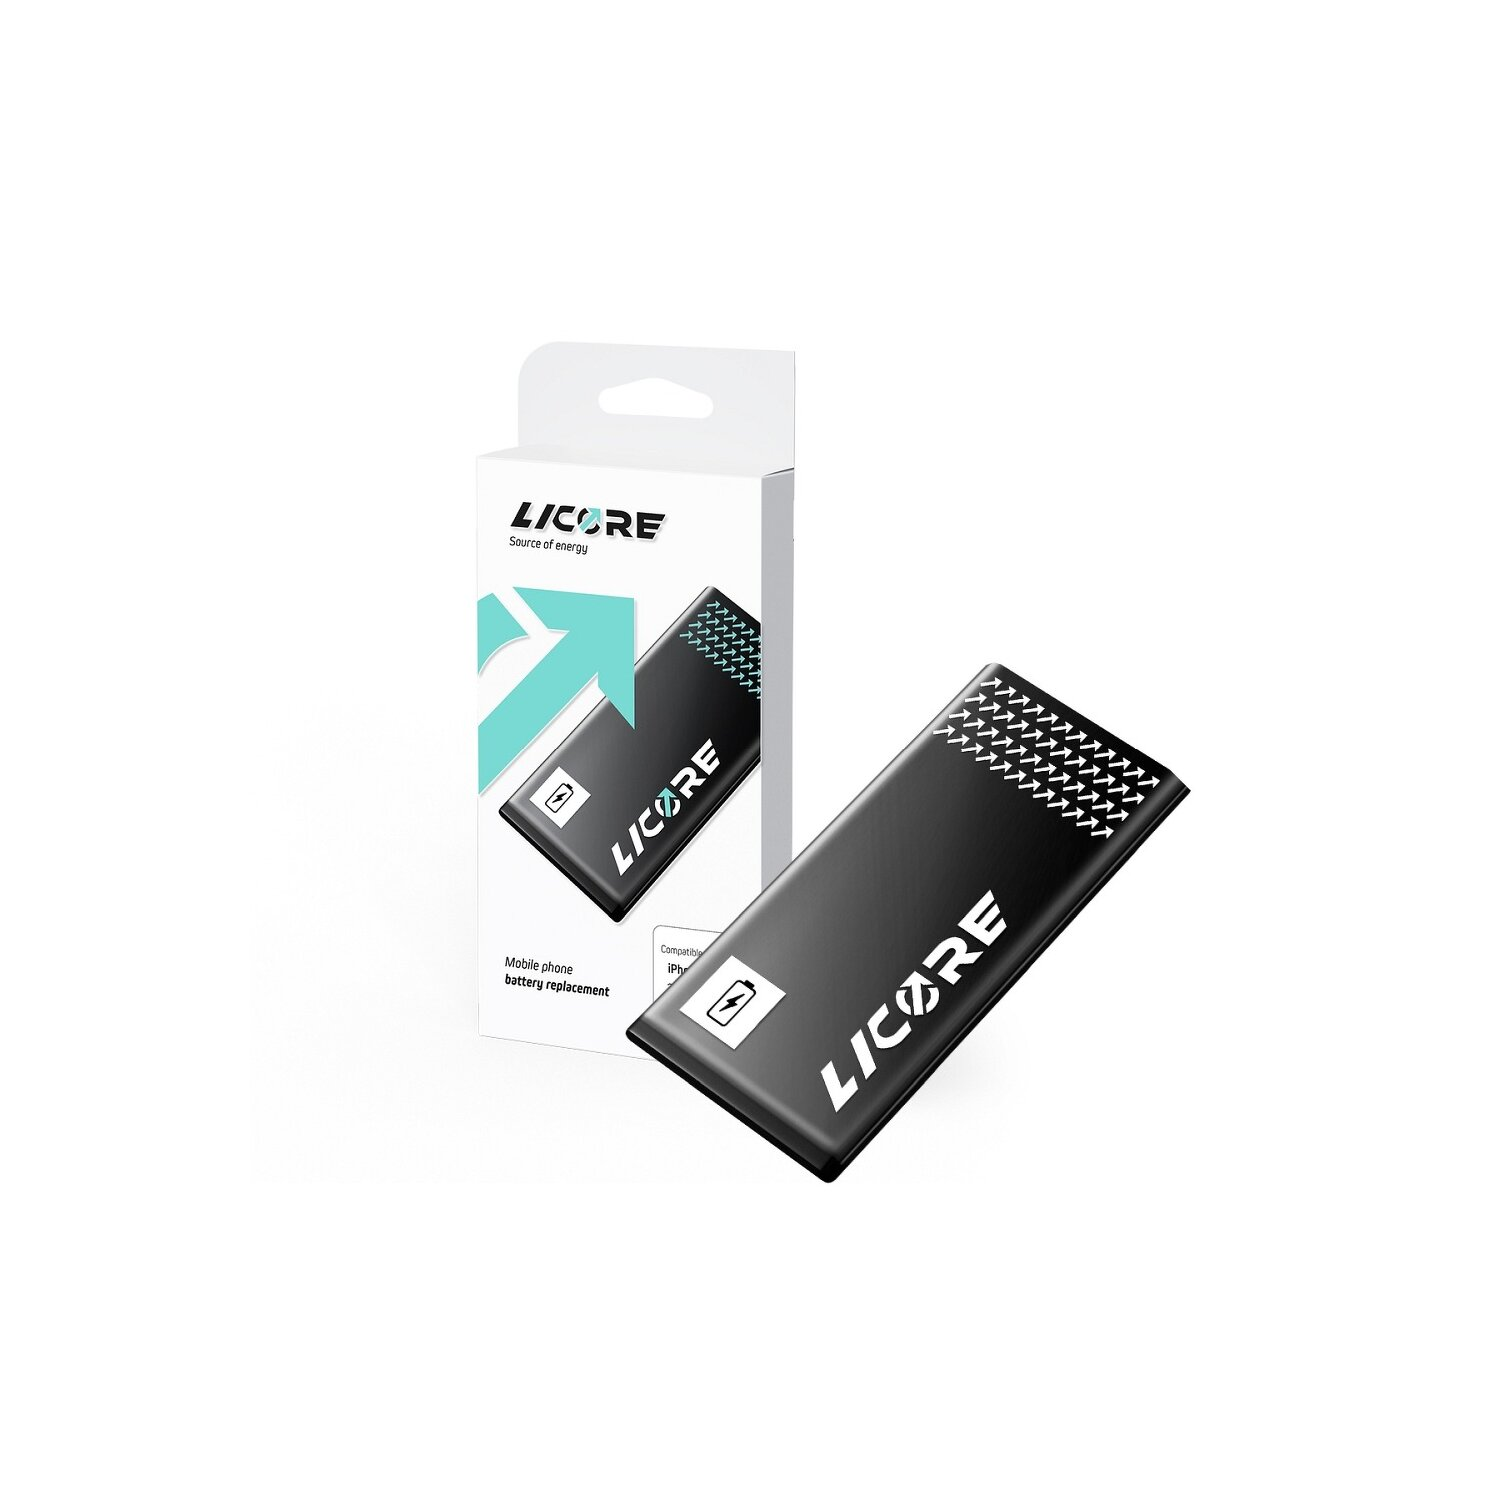 Akku Plus mit 2691mAh COFI iPhone Licore li-Ion Ersatz 8 kompatibel Akku